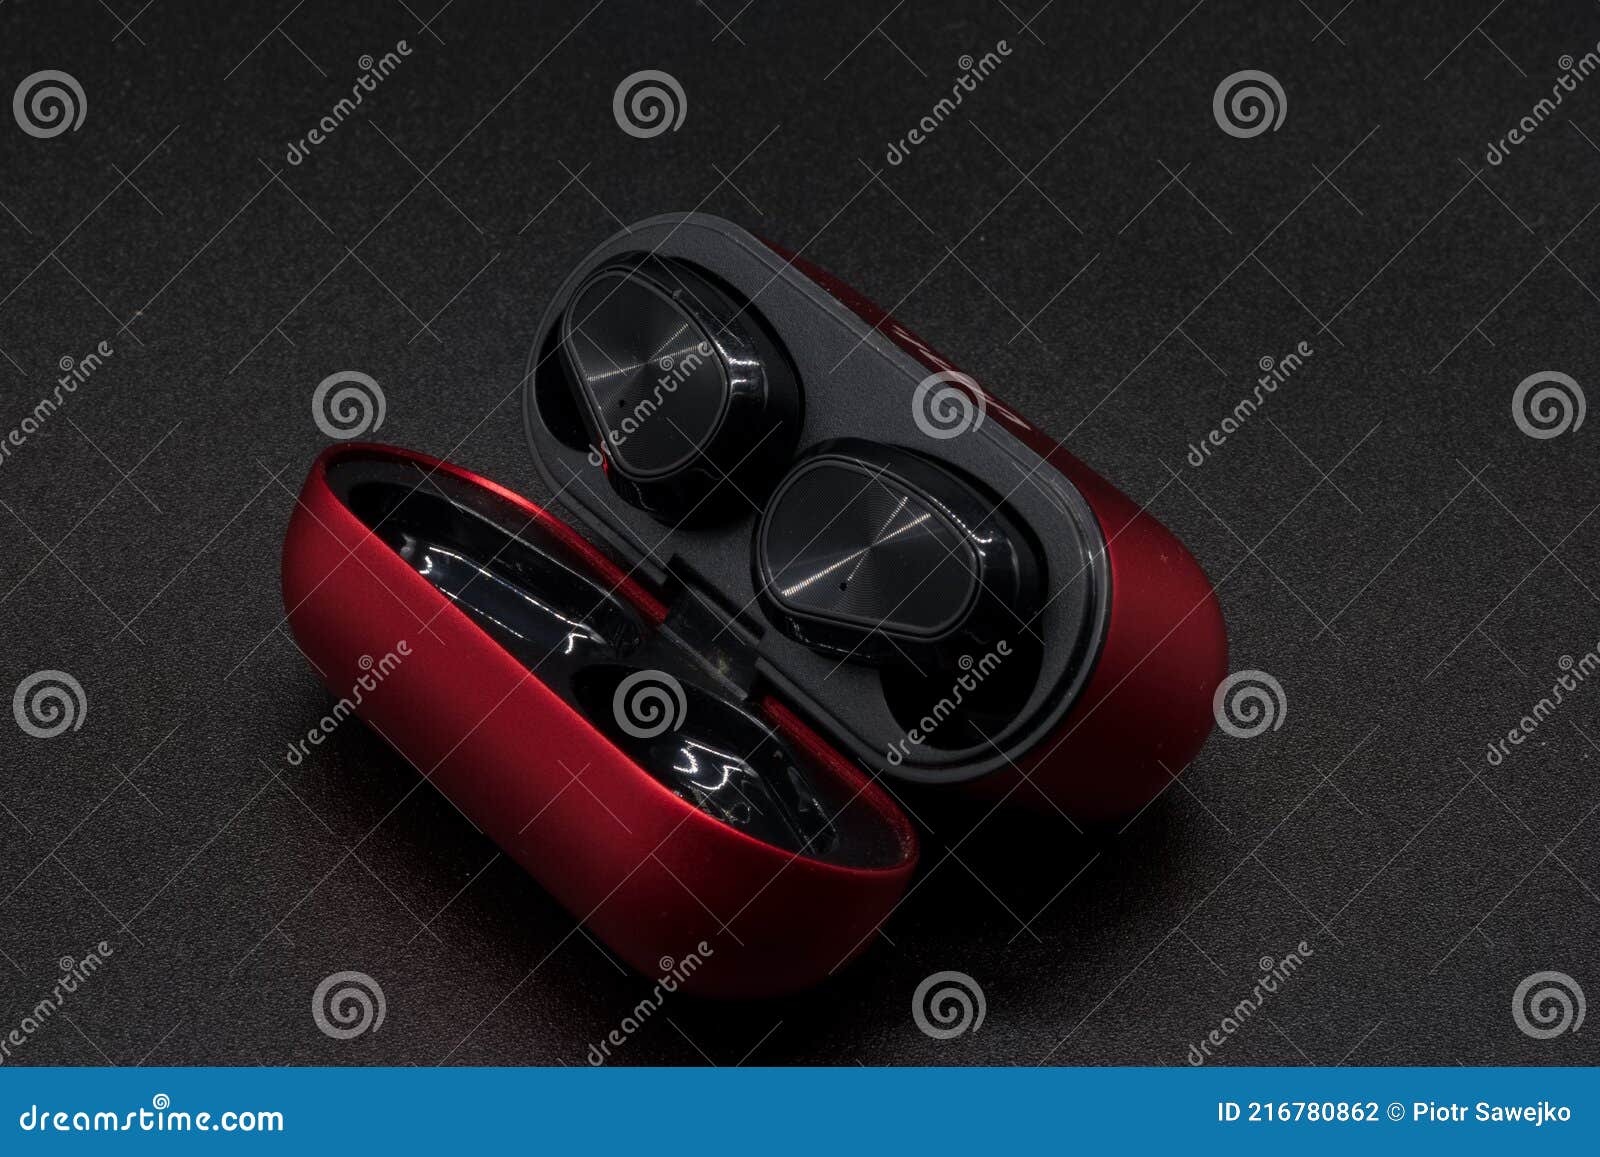 headphonesr electronica metal plastic red black